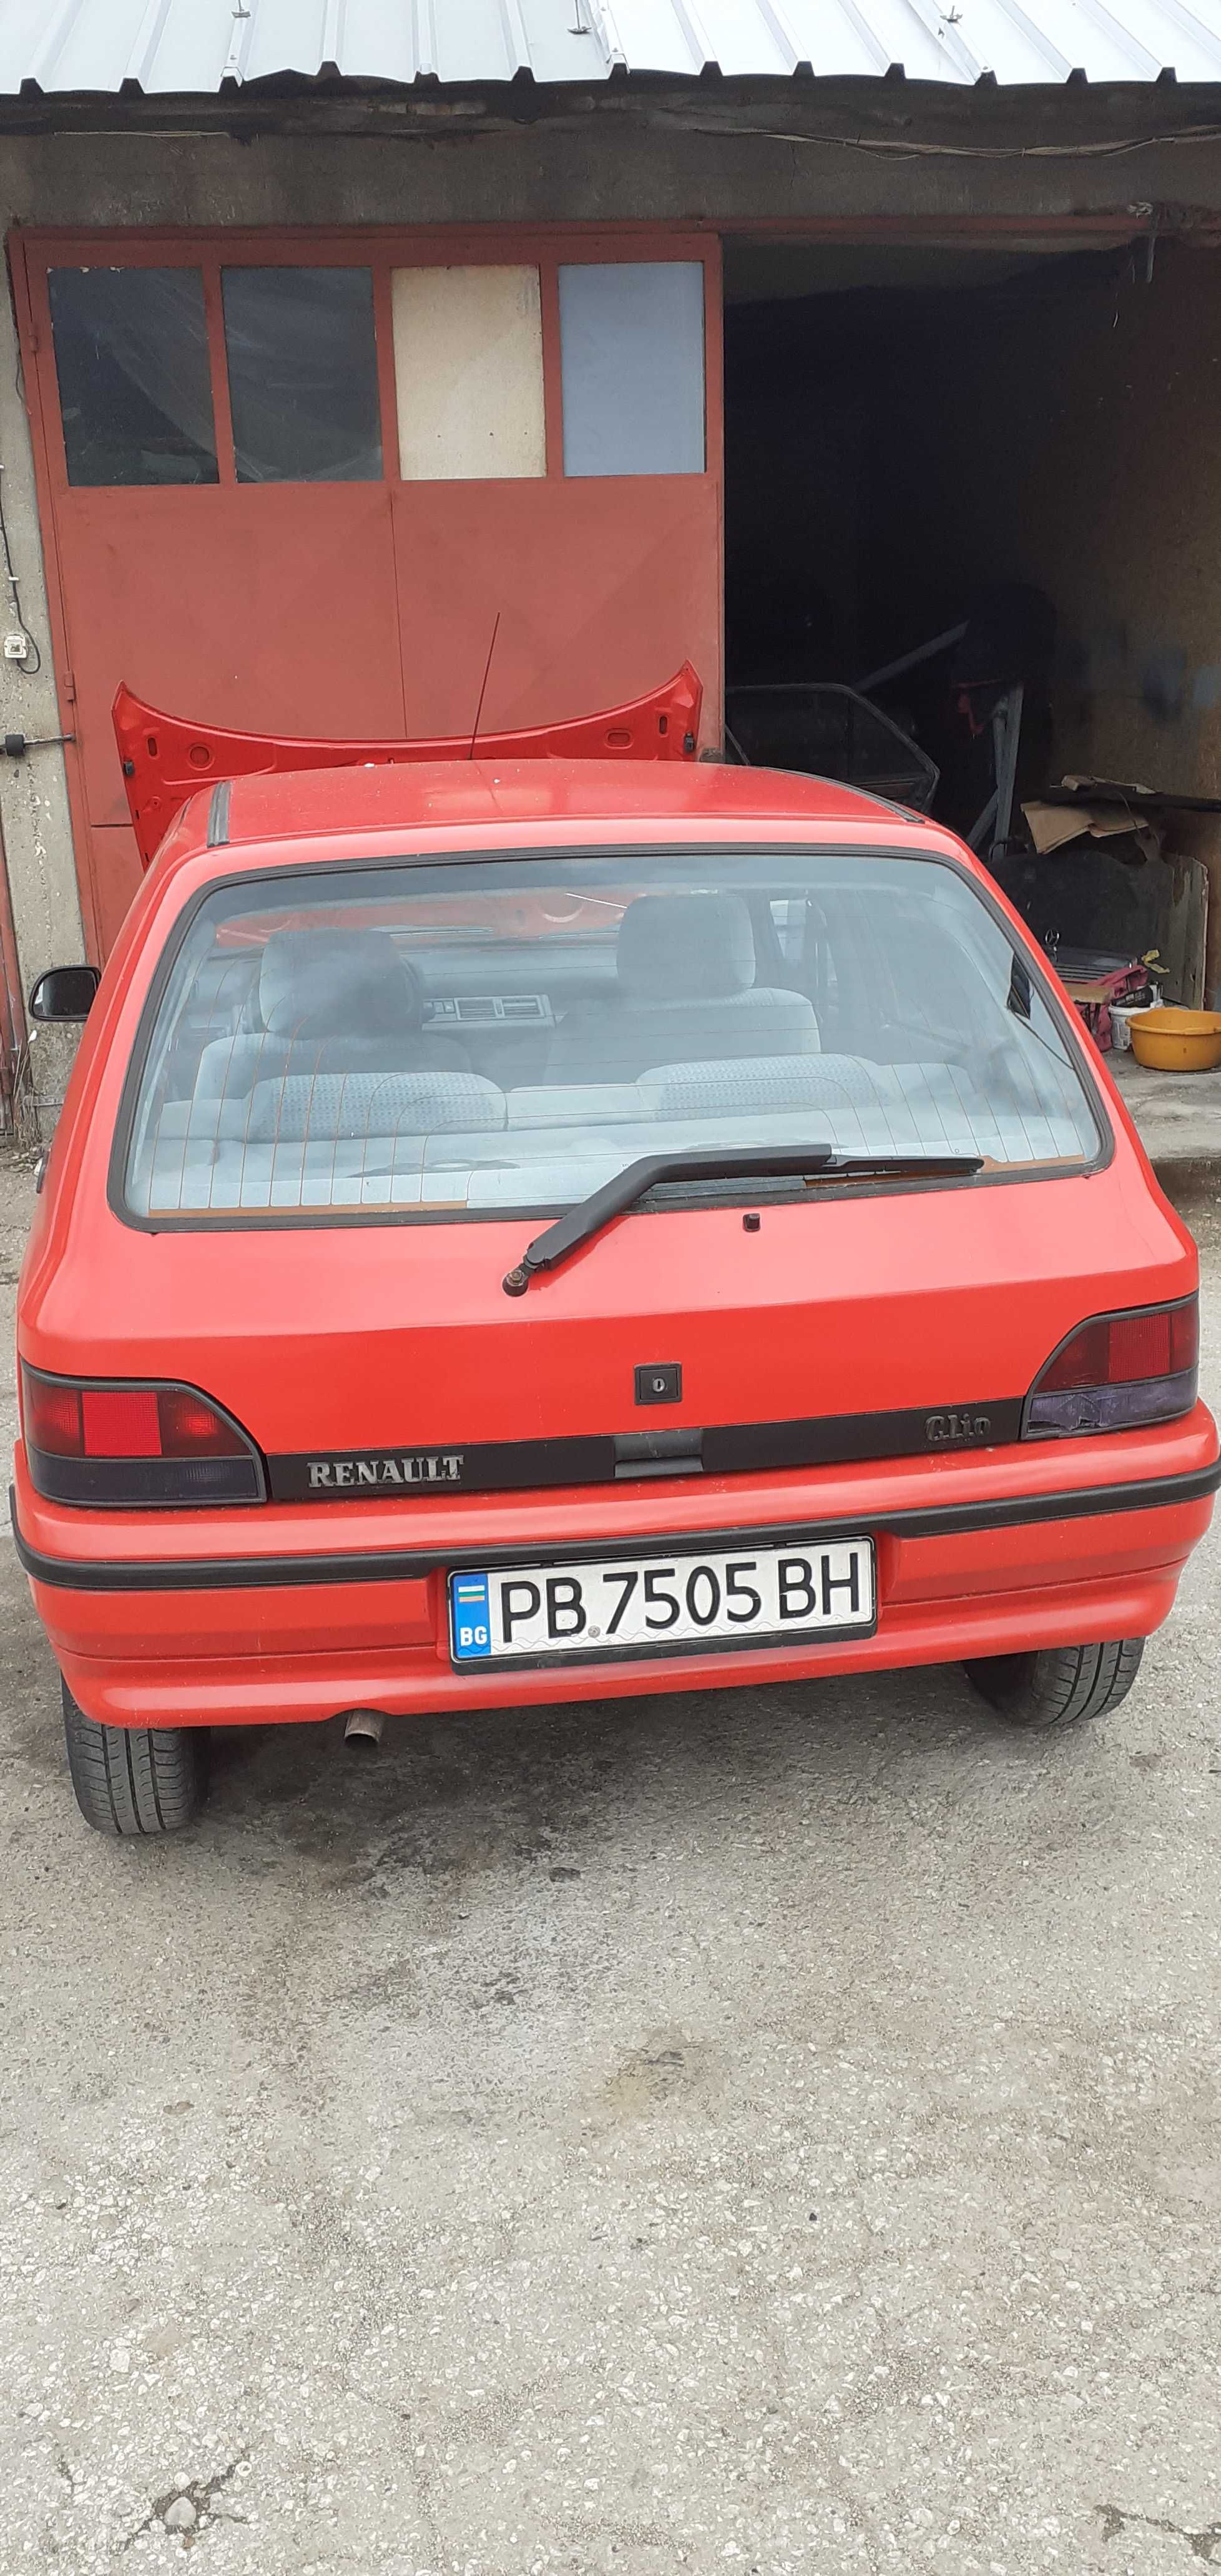 Renault Clio Energy 1.4 GTI - 1992г.